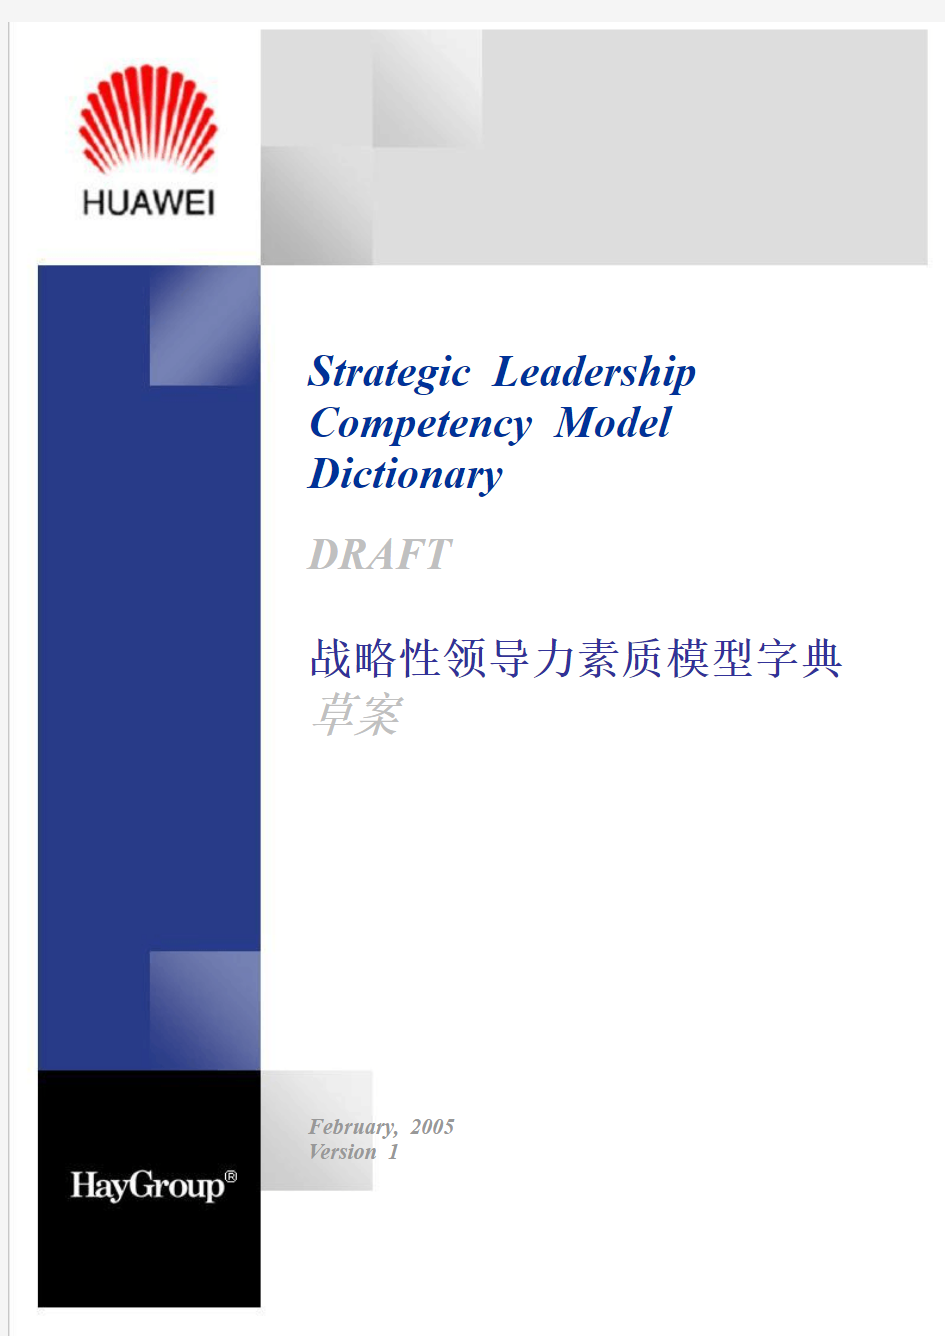 Huawei领导力素质模型